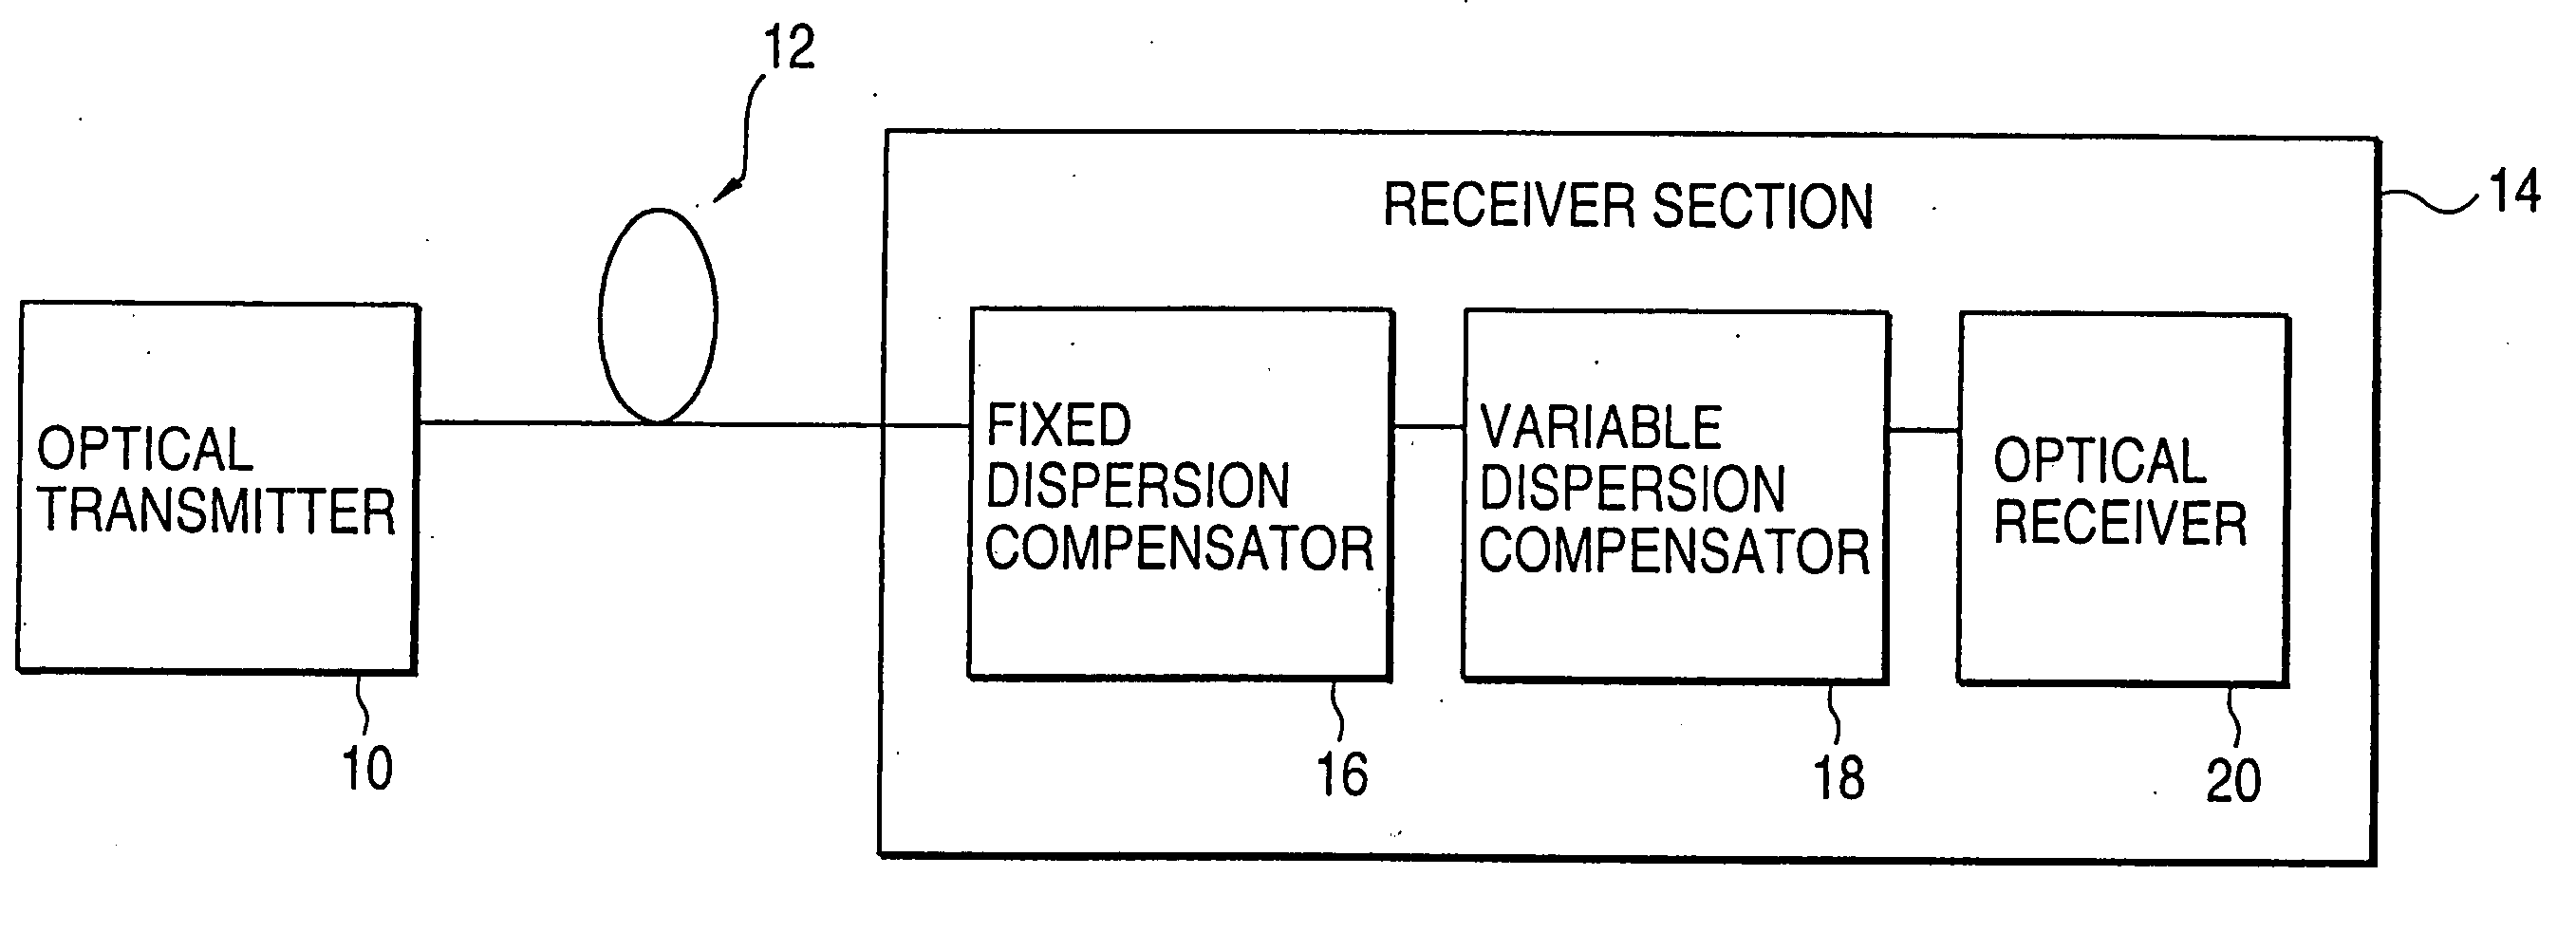 Dispersion compensation apparatus including a fixed dispersion compensator for coarse compensation and a variable dispersion compensator for fine compensation